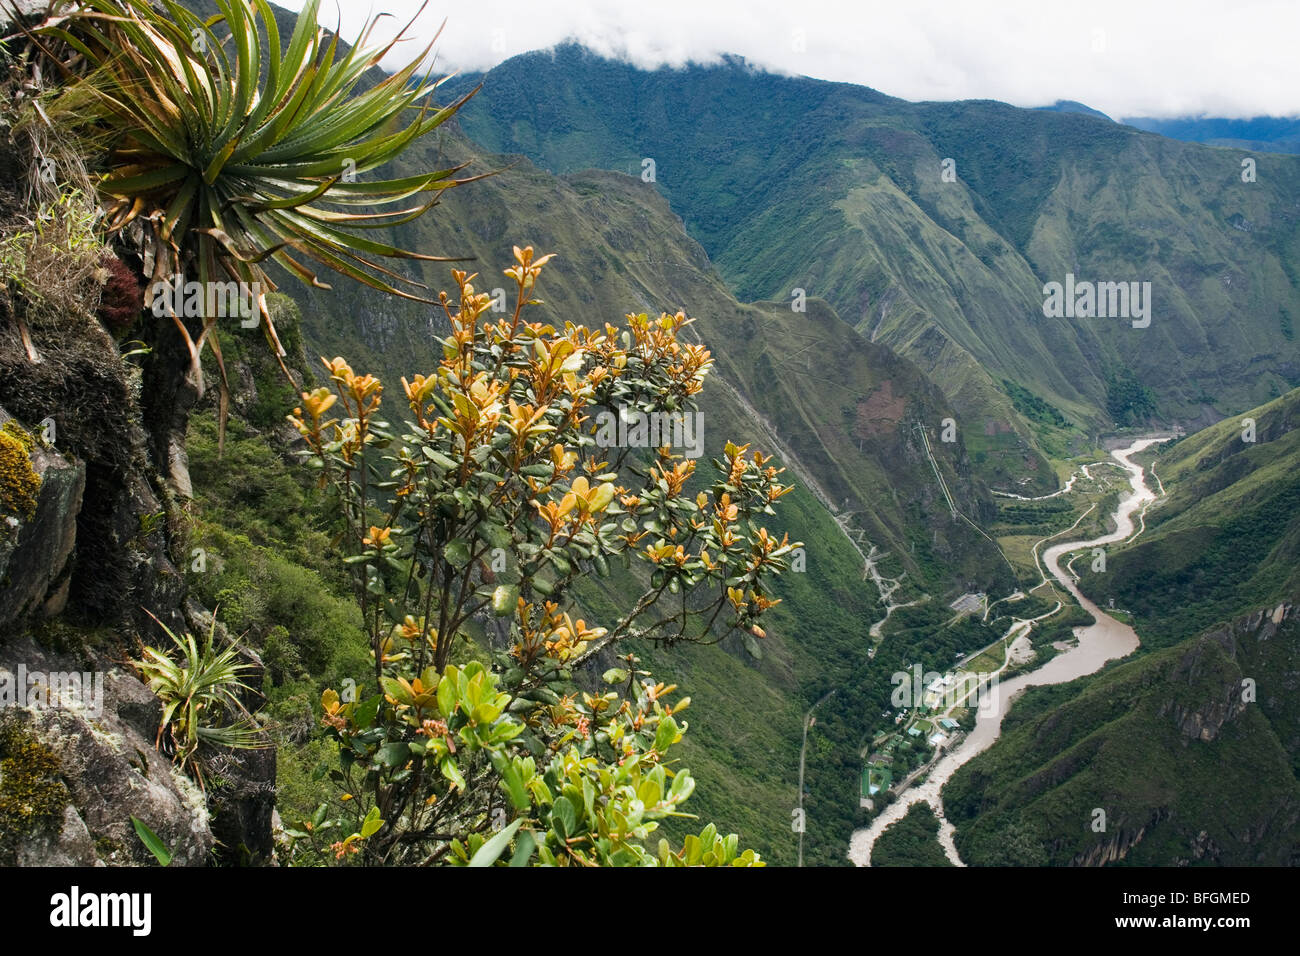 Andes mountains and Canyon of the Urubamba river, Urubamba province, Peru Stock Photo